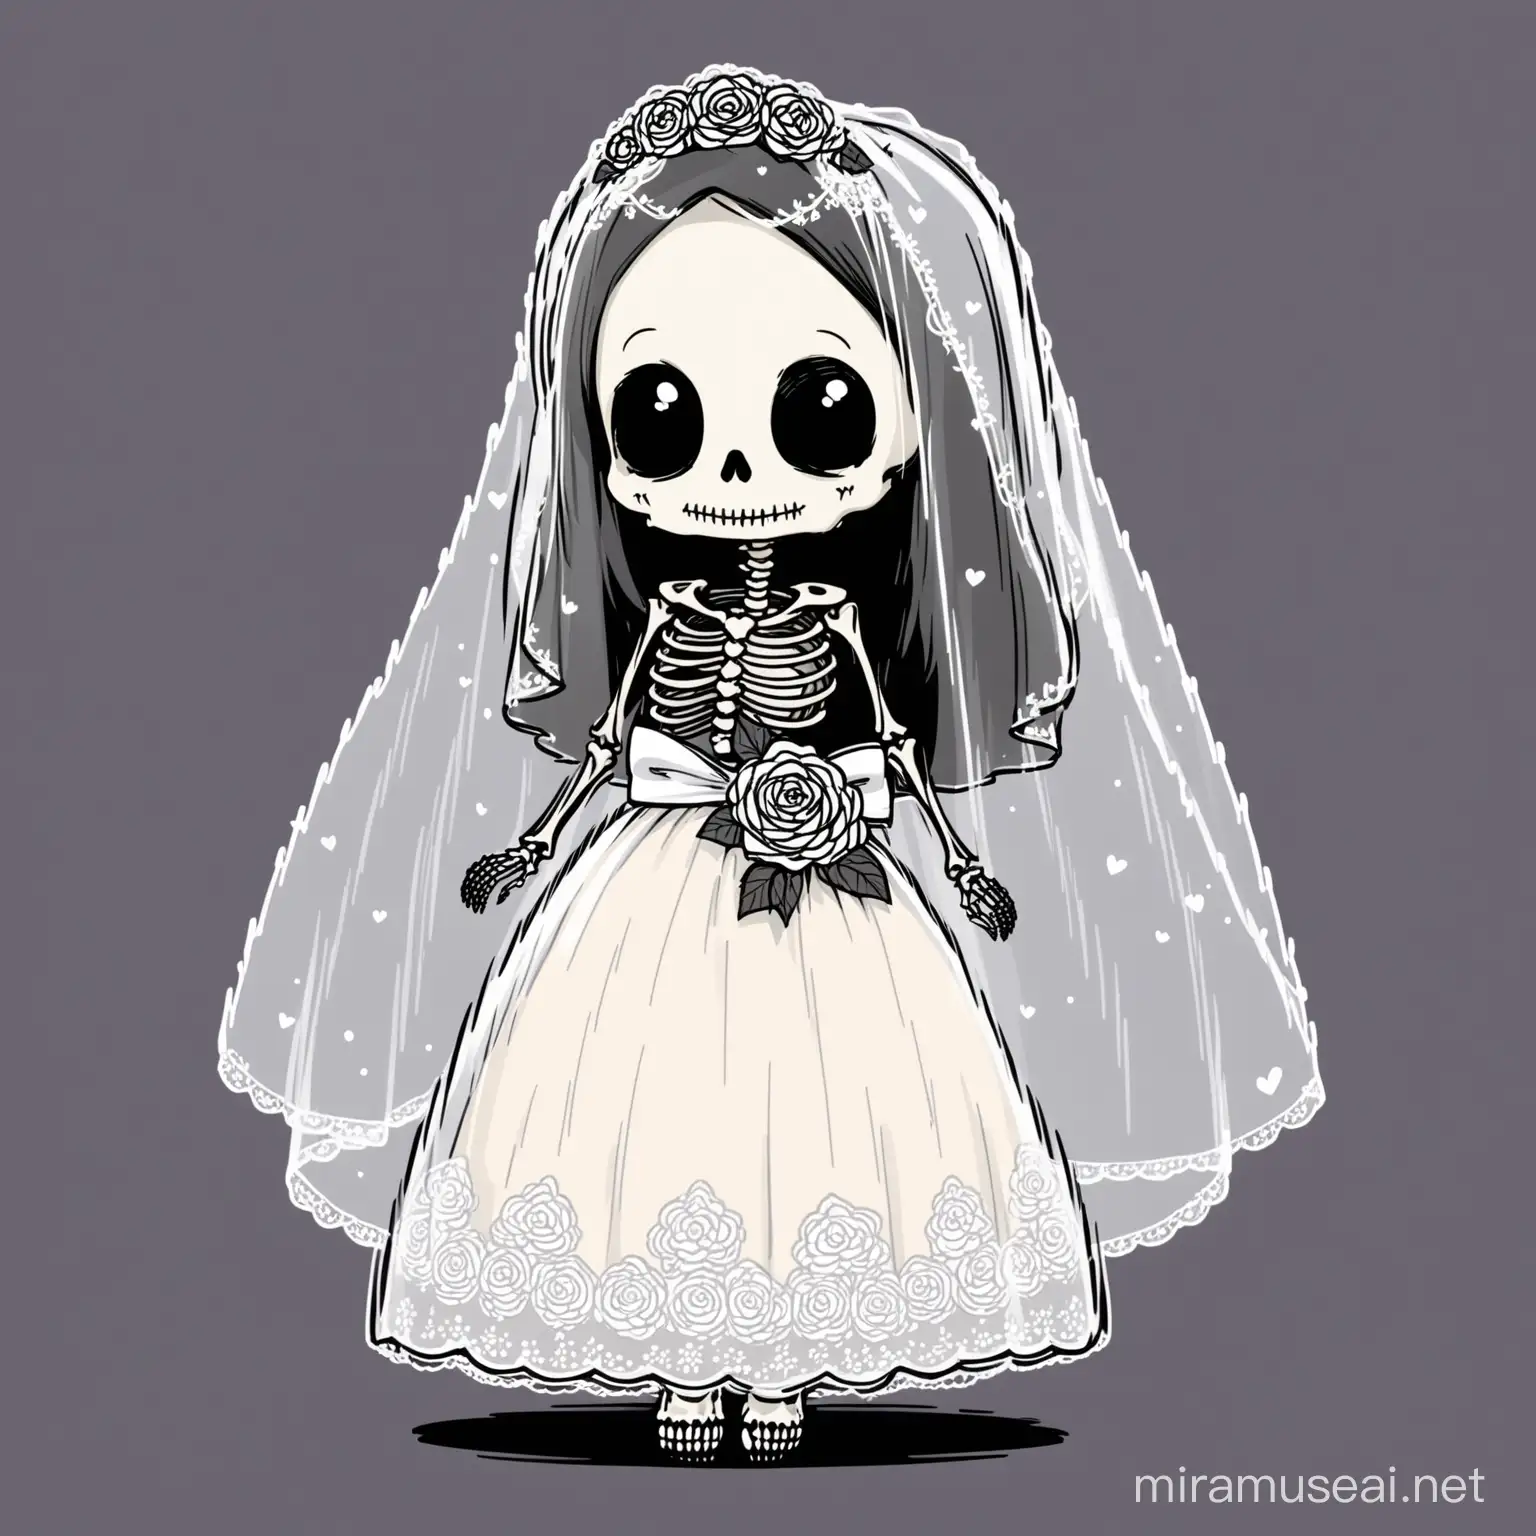 drawing of a cute skeleton wearing a wedding veil